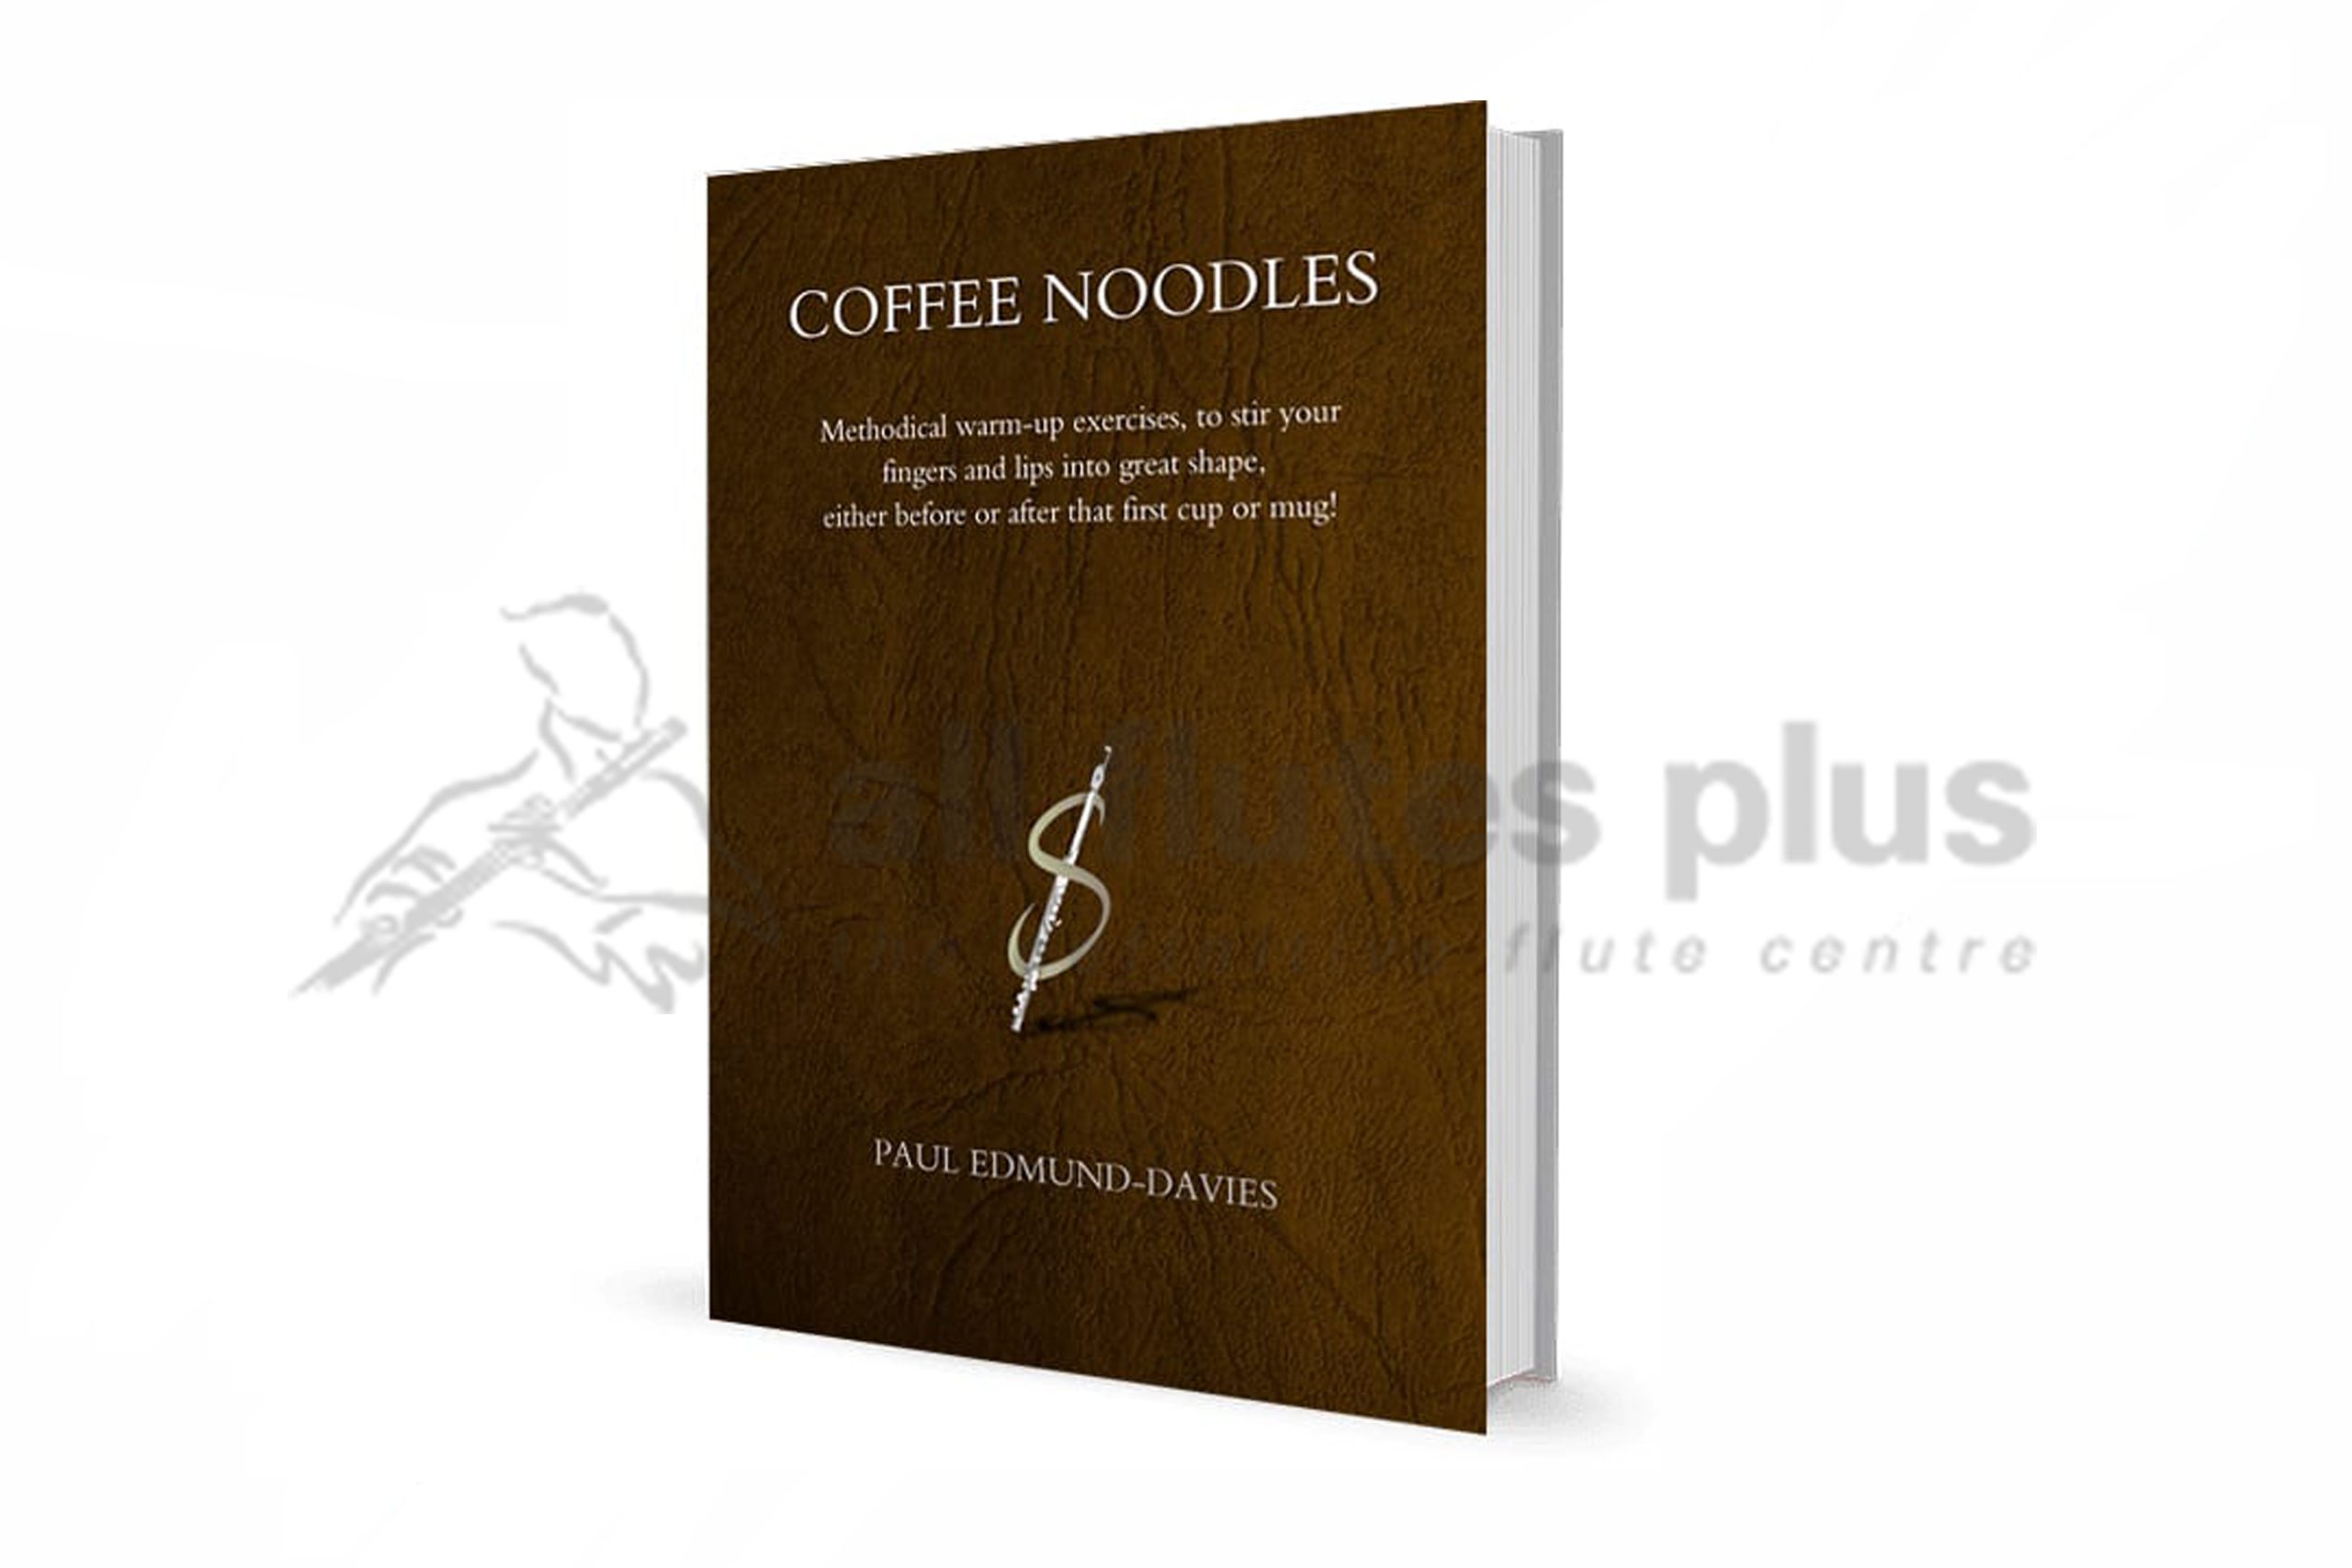 Coffee Noodles by Paul Edmund Davies